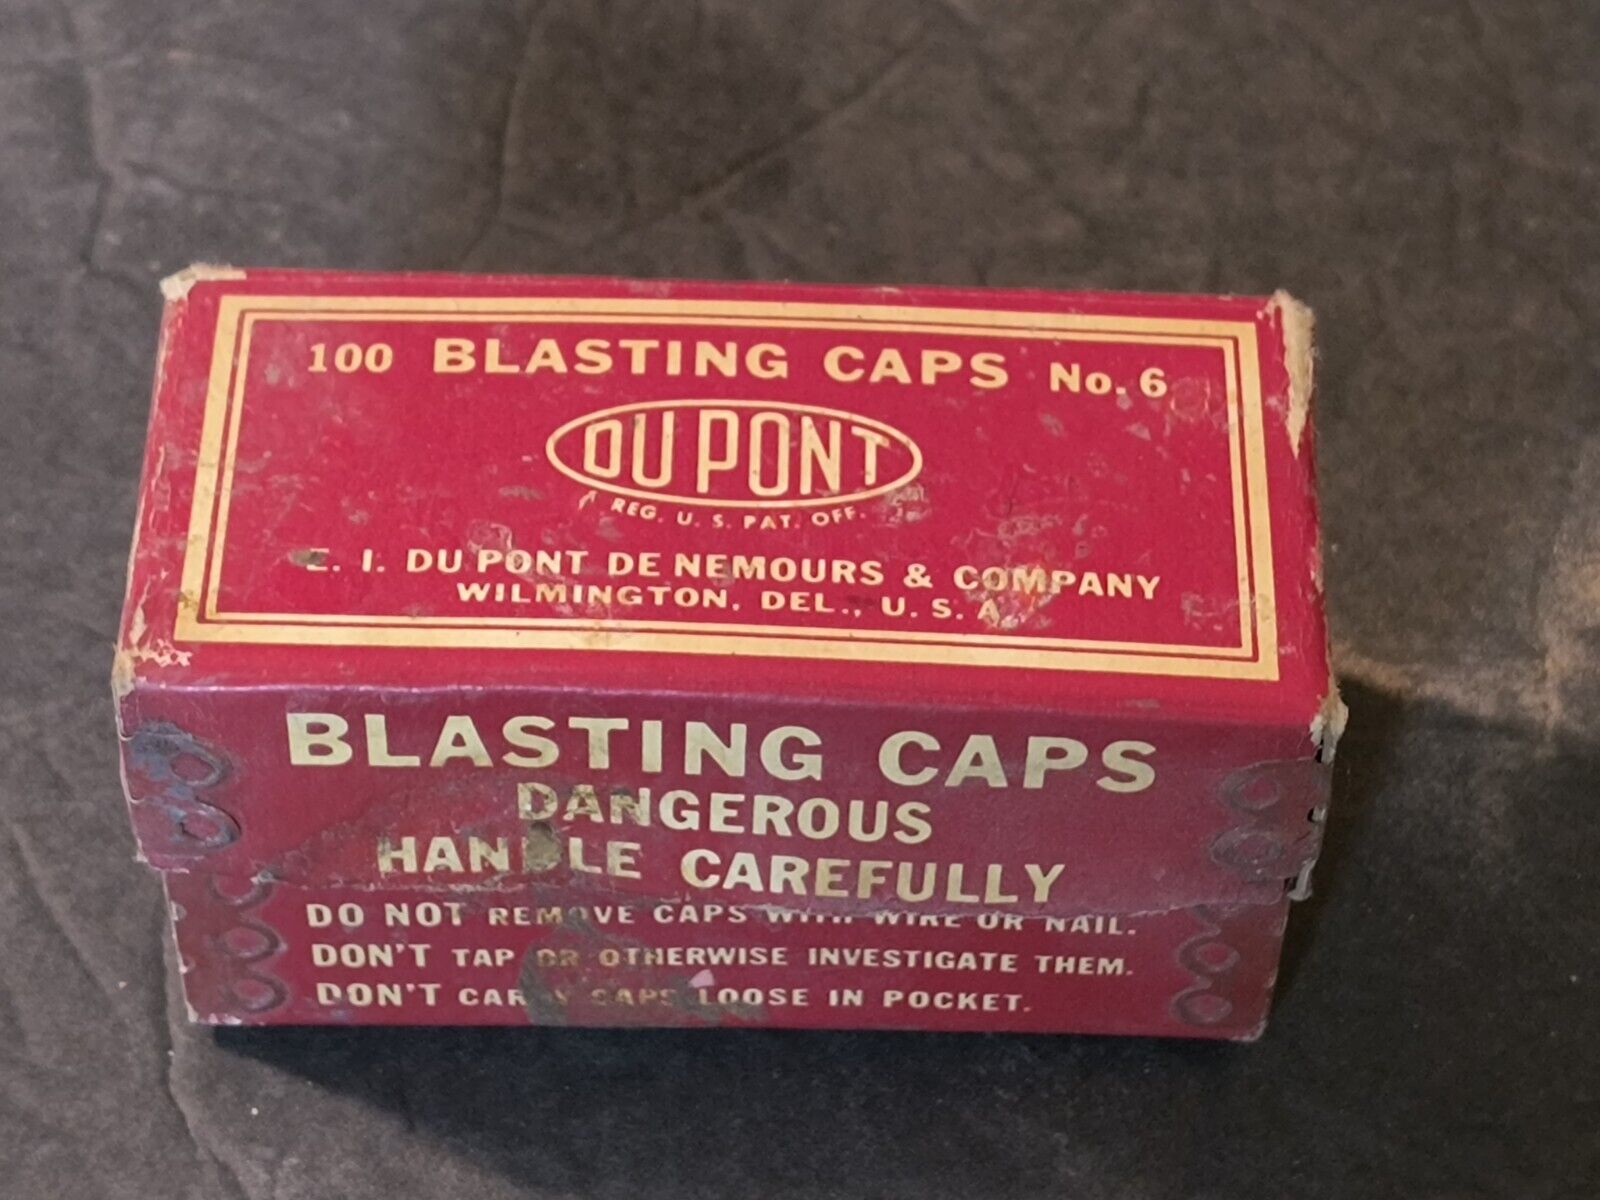 Du Pont 100 Blasting Caps No 6 EMPTY cardboard box Display Vintage Advertising 